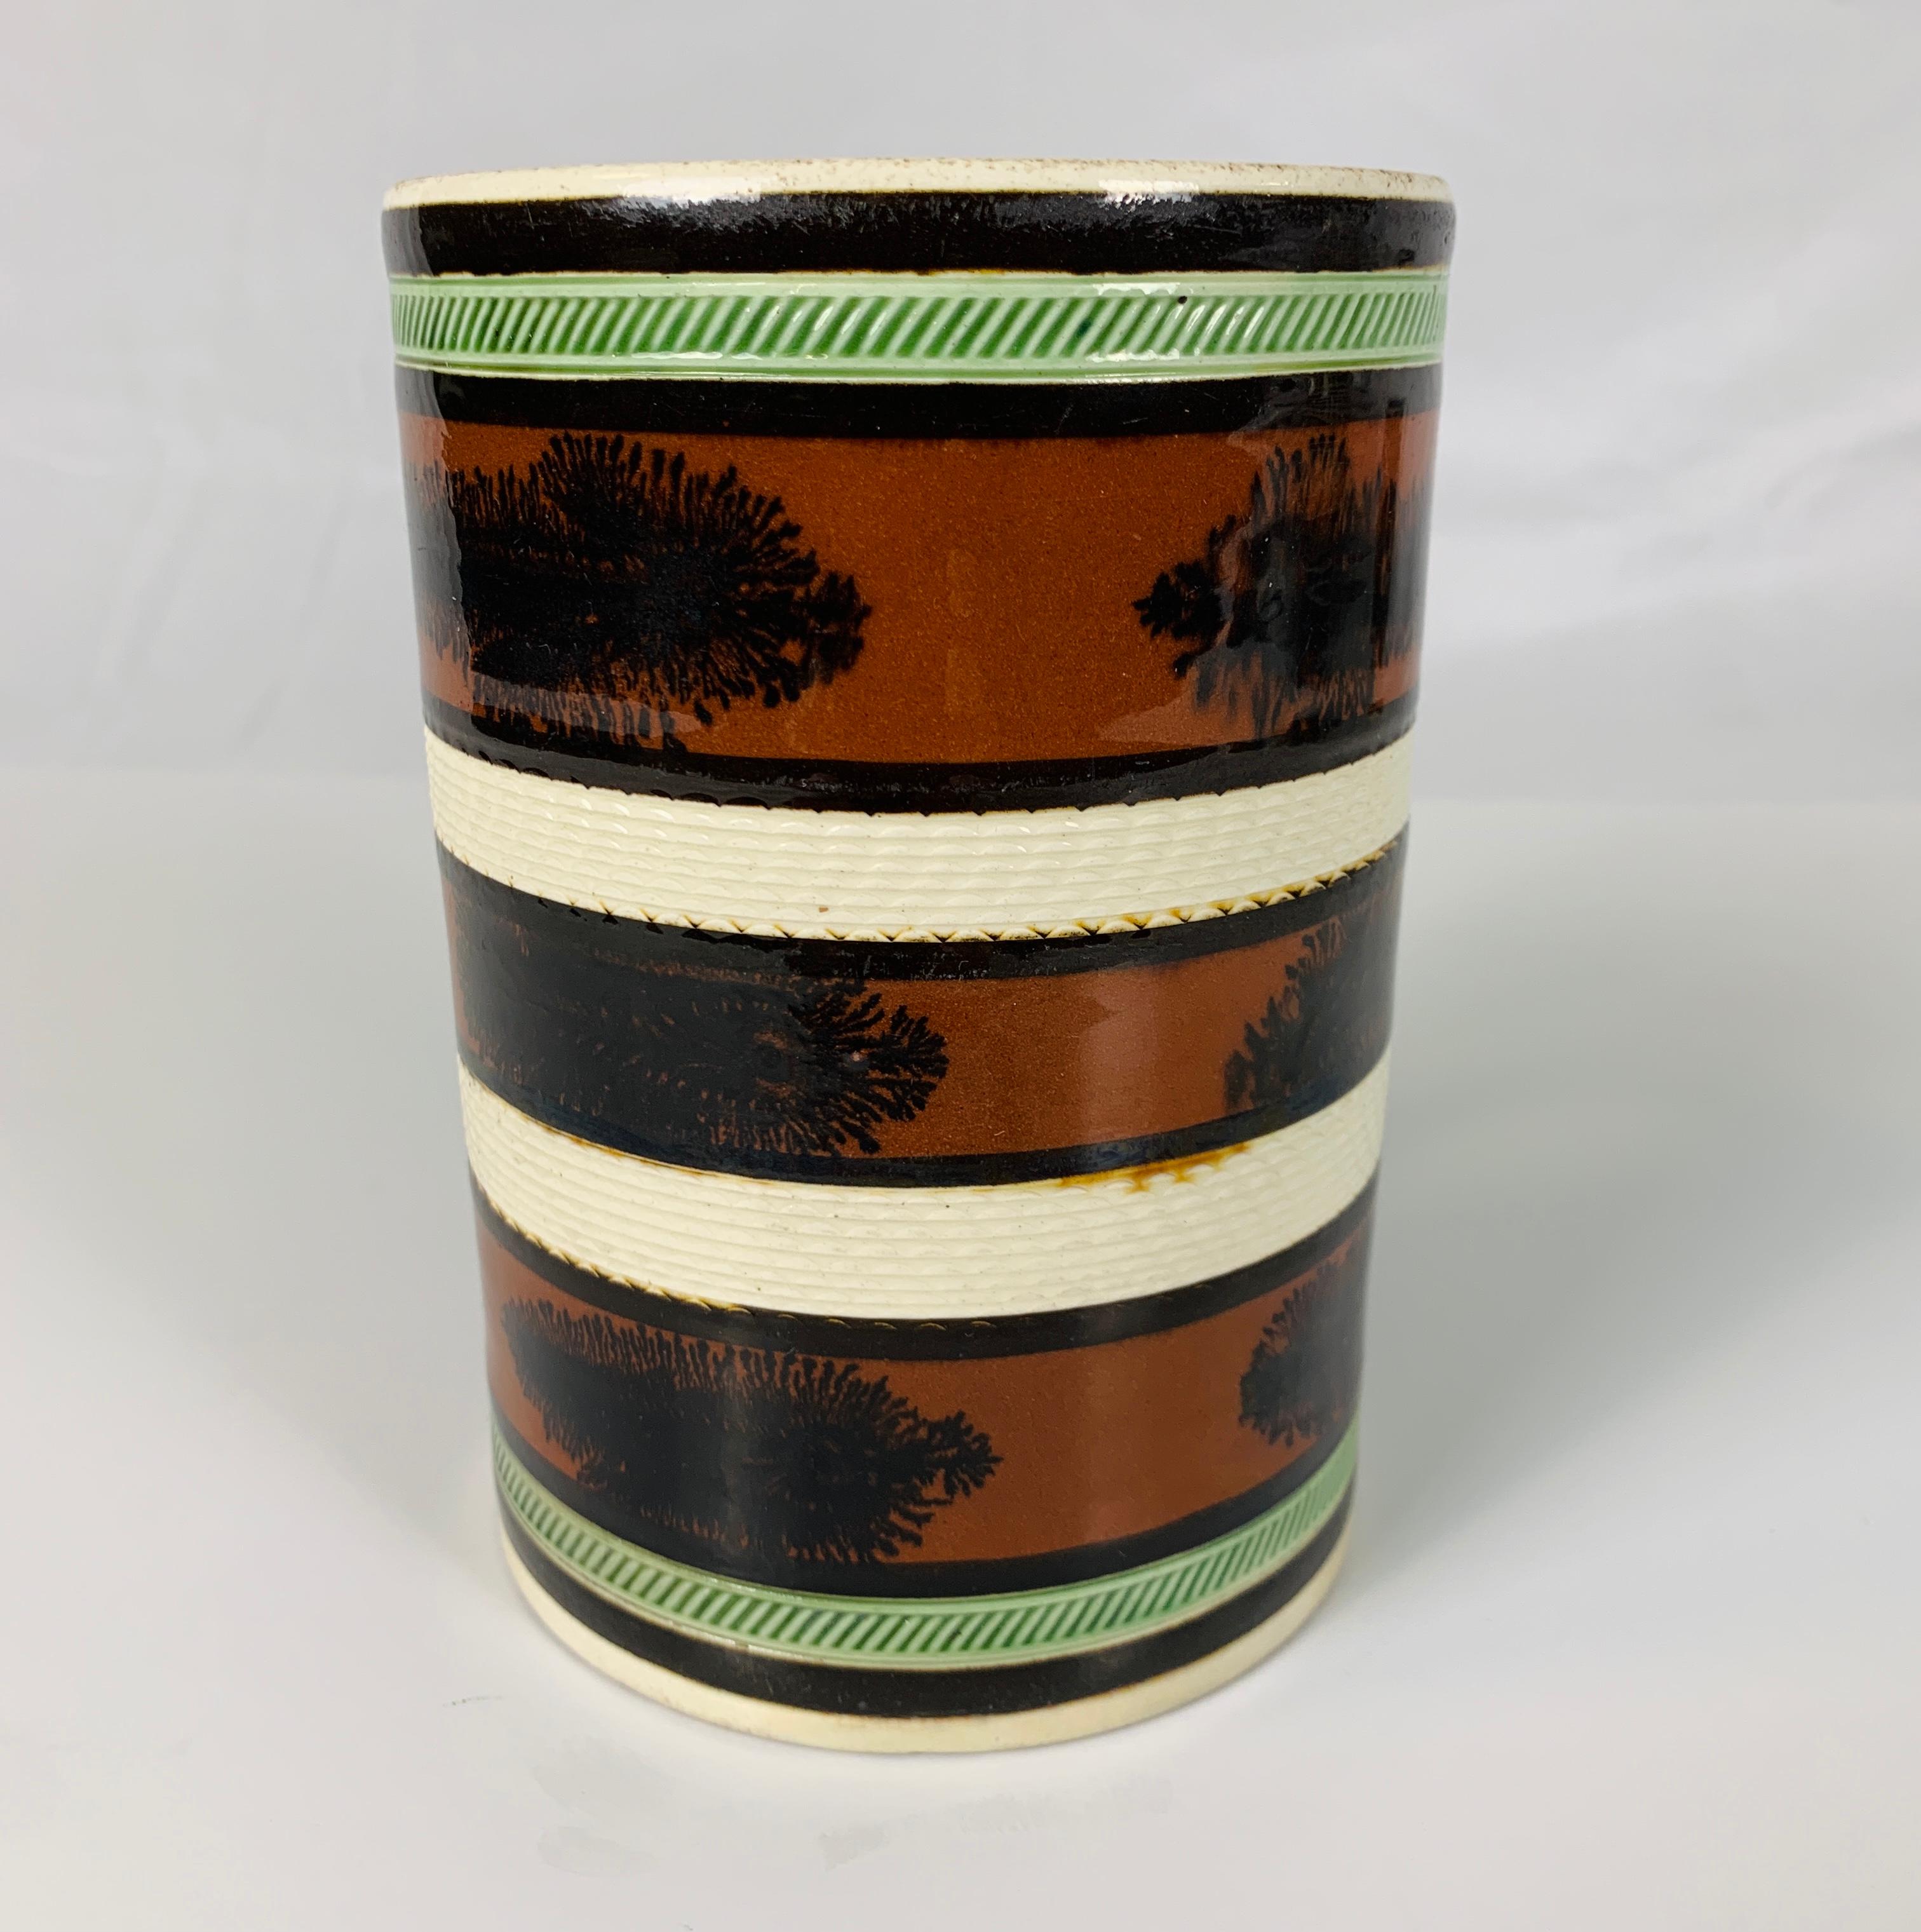 19th Century  Mochaware Creamware Mug Made in England circa 1800 Decorated with 